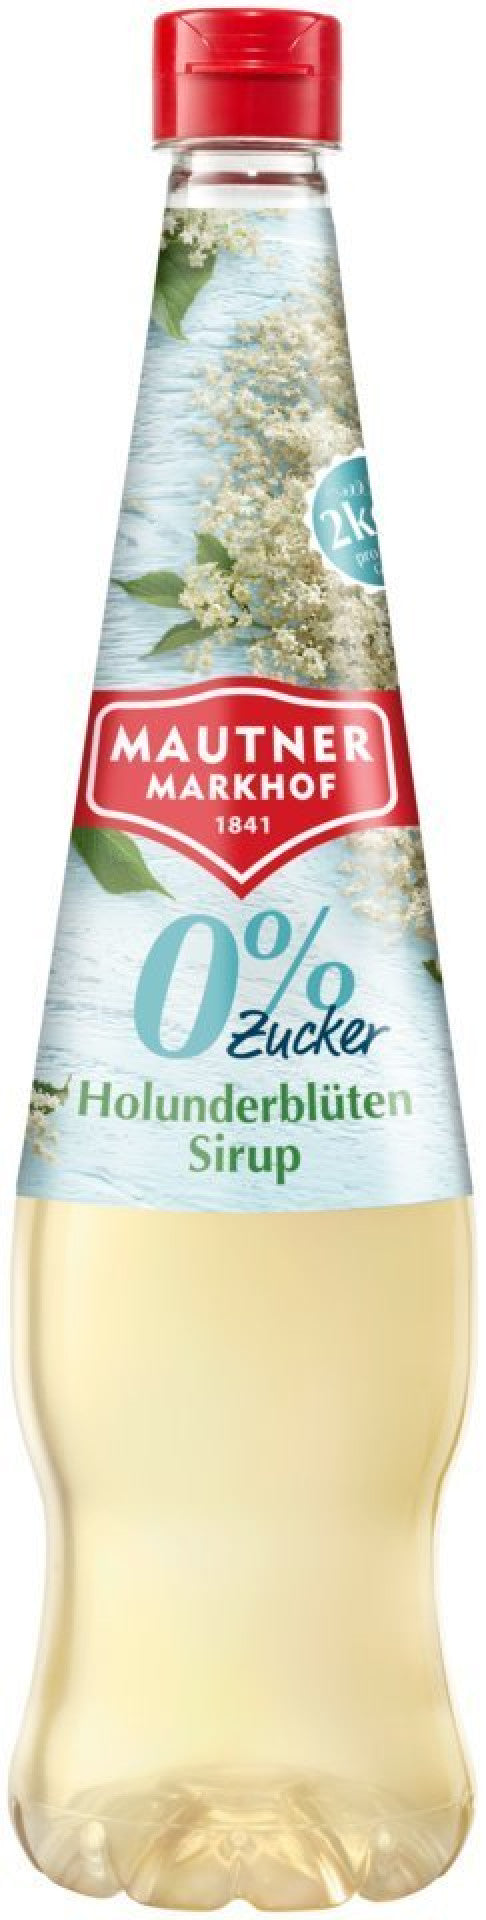 Mautner Markhof 0% Zucker Sirup Holunderblüte